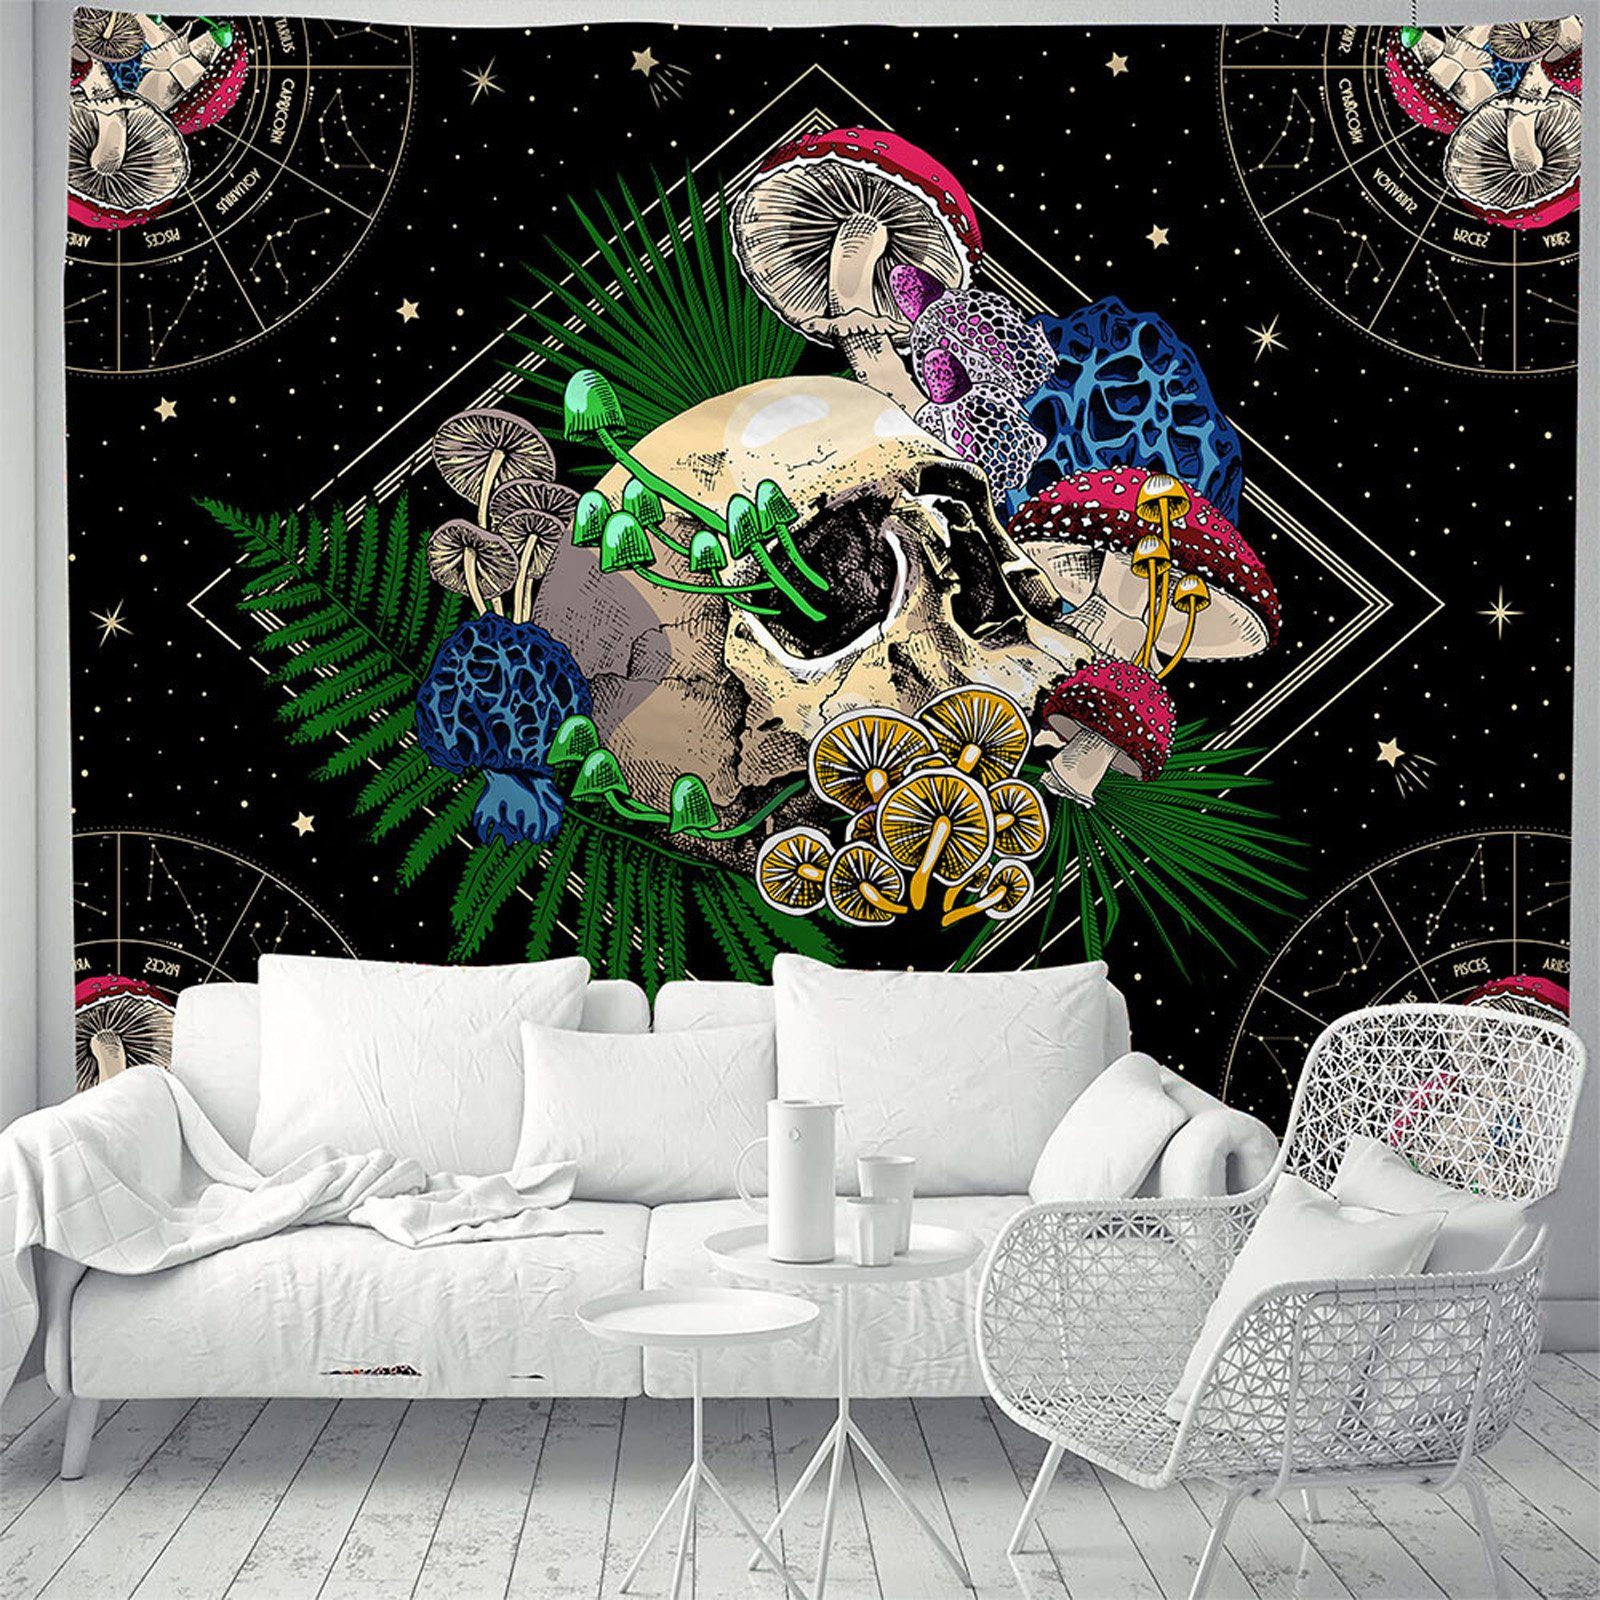 Wandbehang Überwurf Tagesdecke 205 x 140 cm Picknick Tuch Elefant Abstrakt 